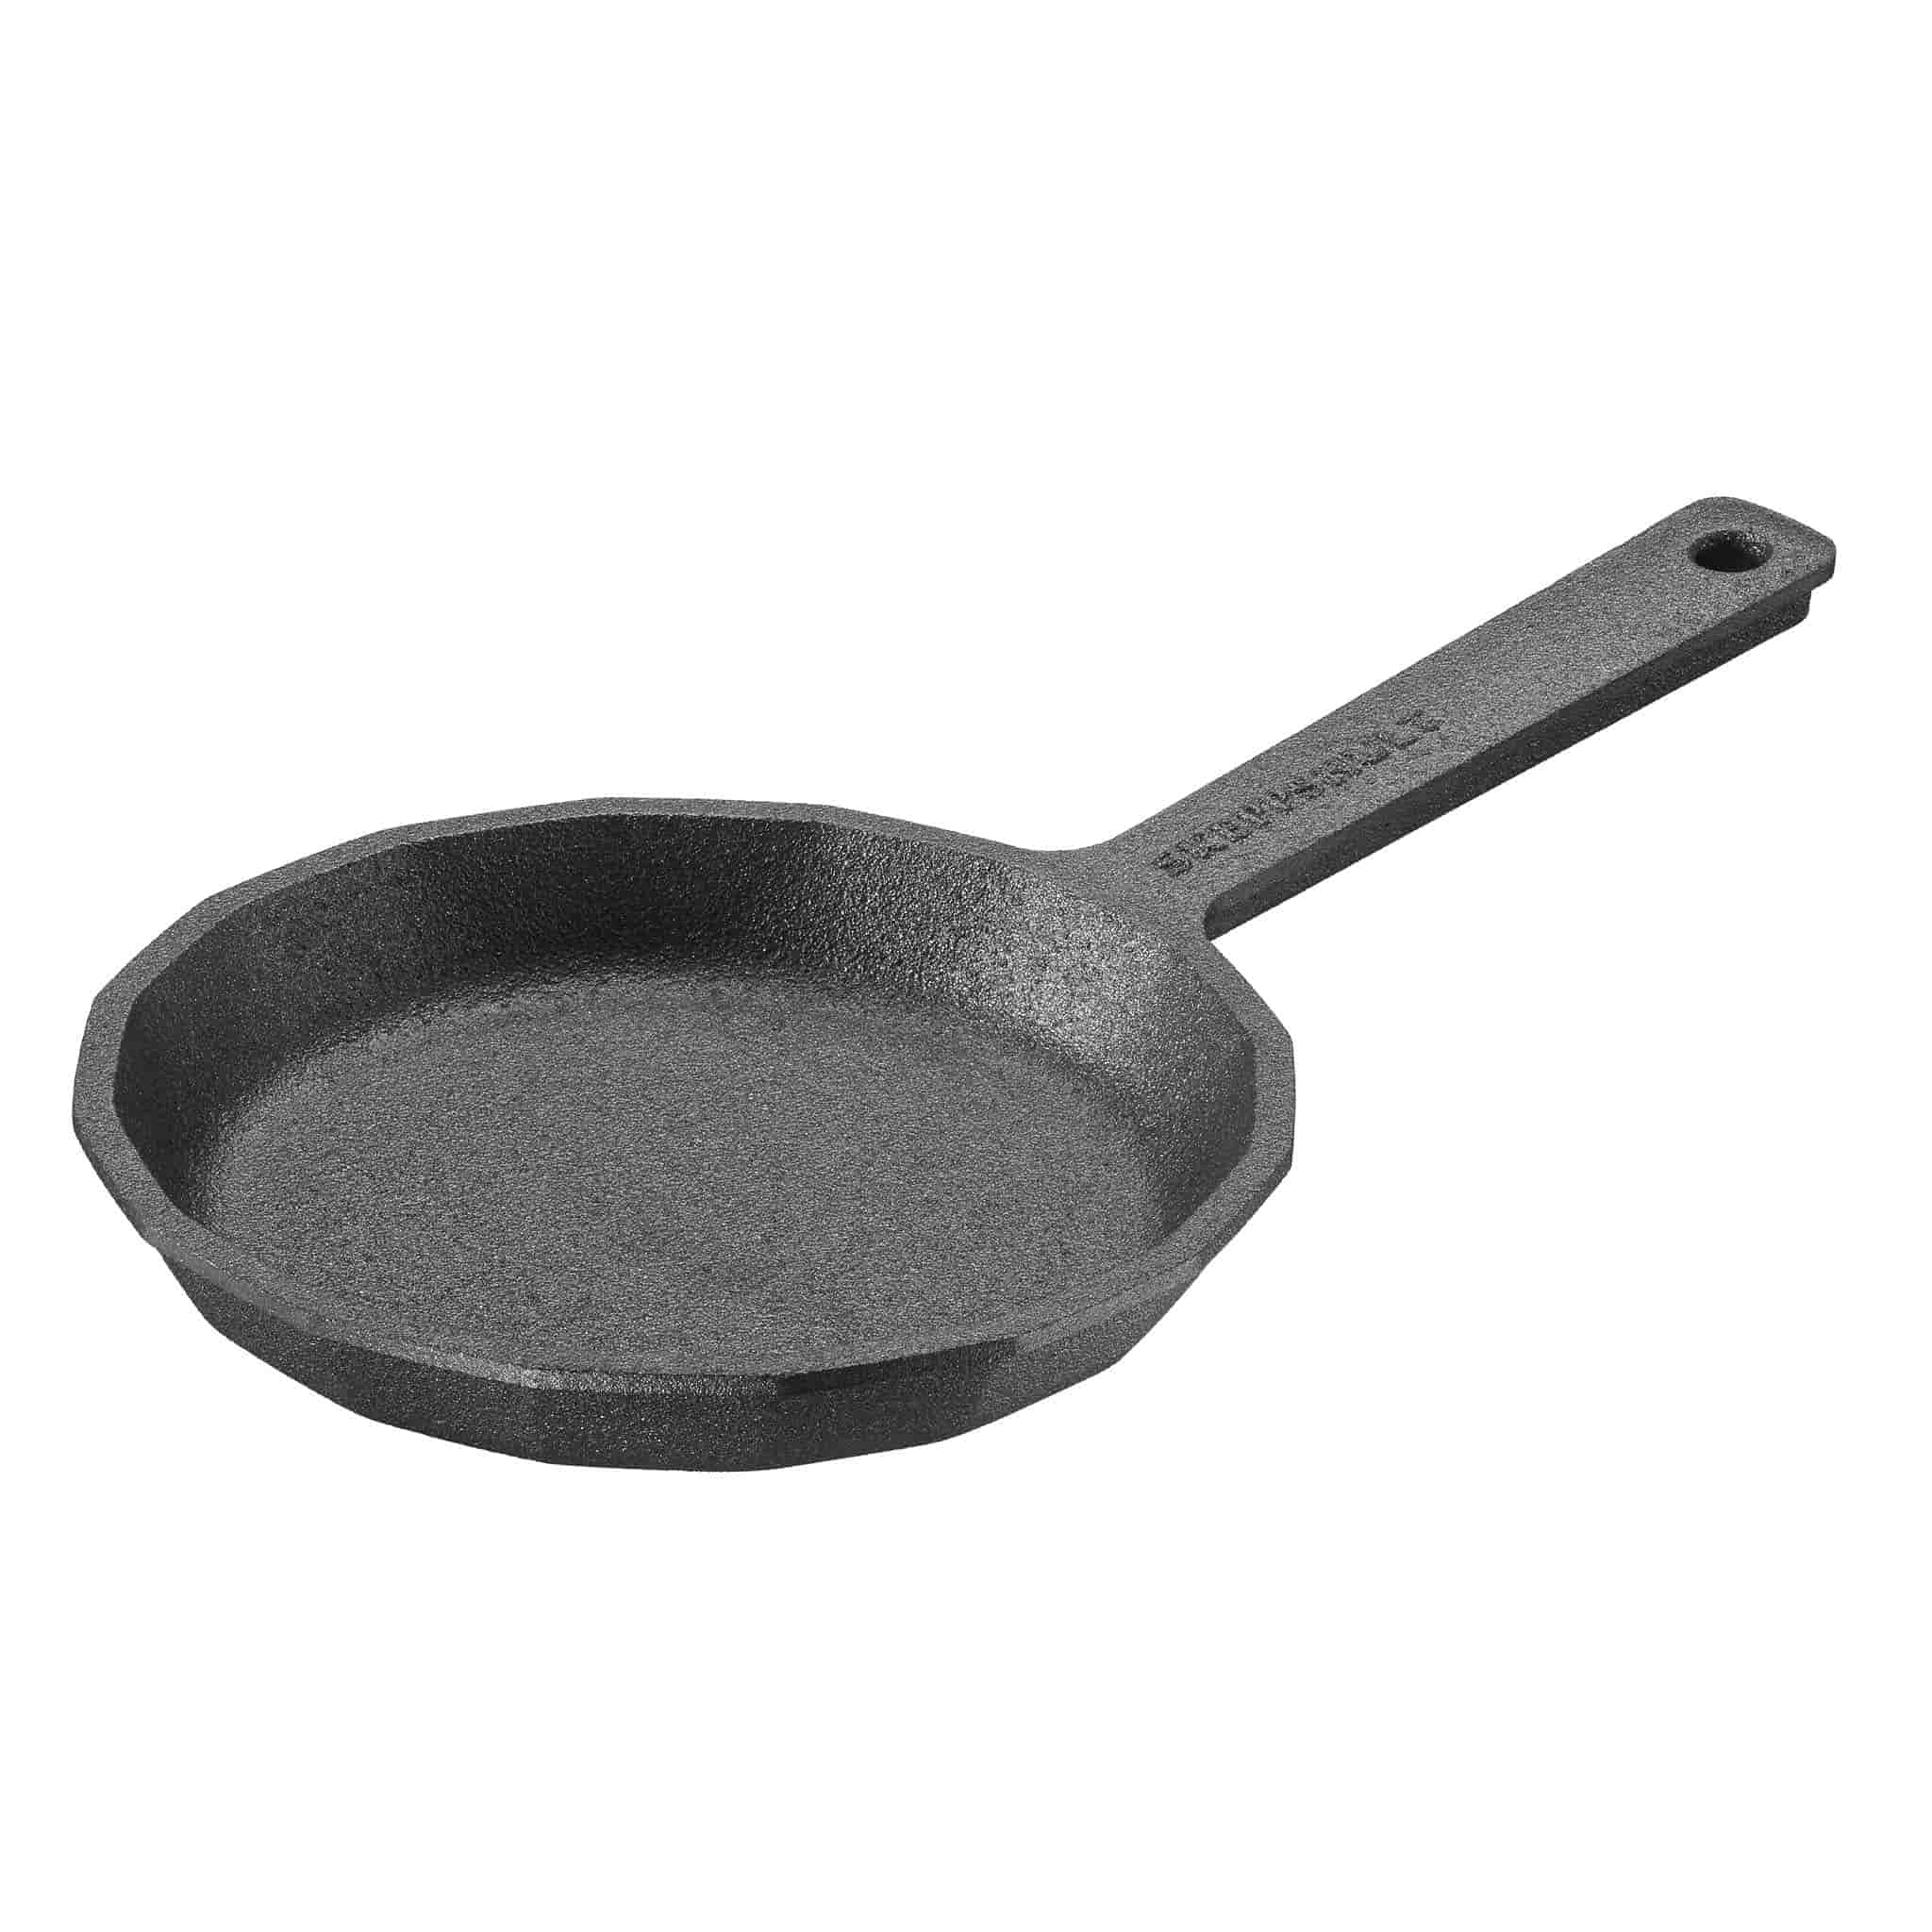 Skeppshult JARN Cast Iron Frying Pan, 15cm